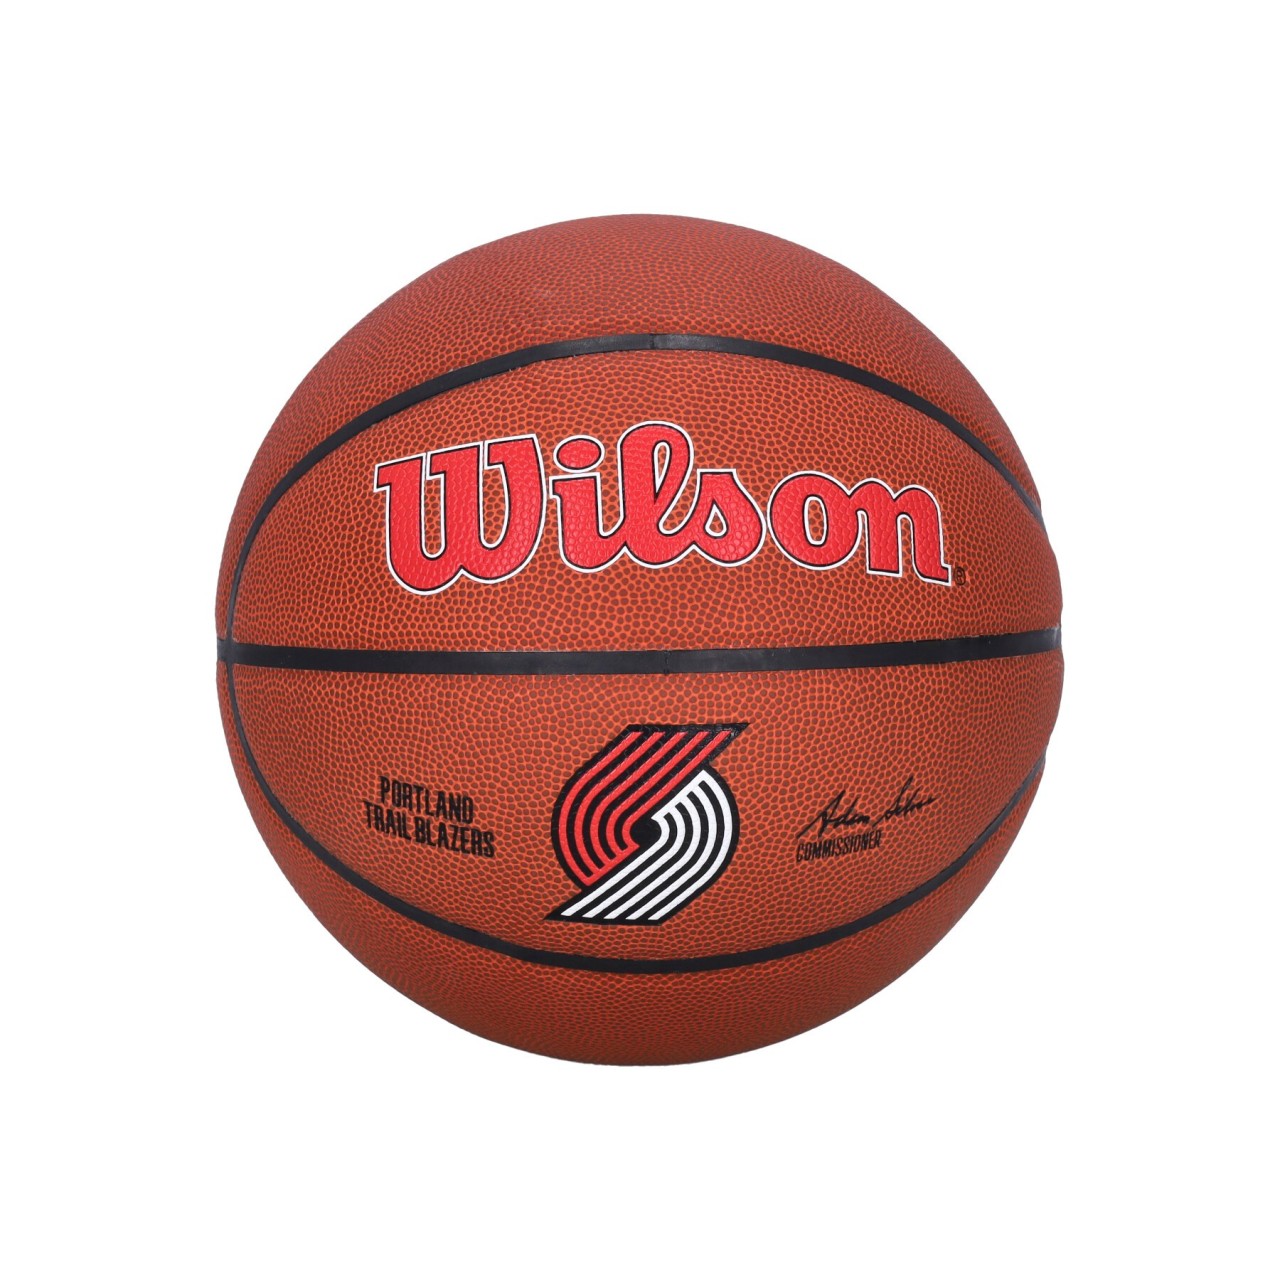 WILSON TEAM NBA TEAM ALLIANCE BASKETBALL SIZE 7 PORBLA WTB3100XBPOR